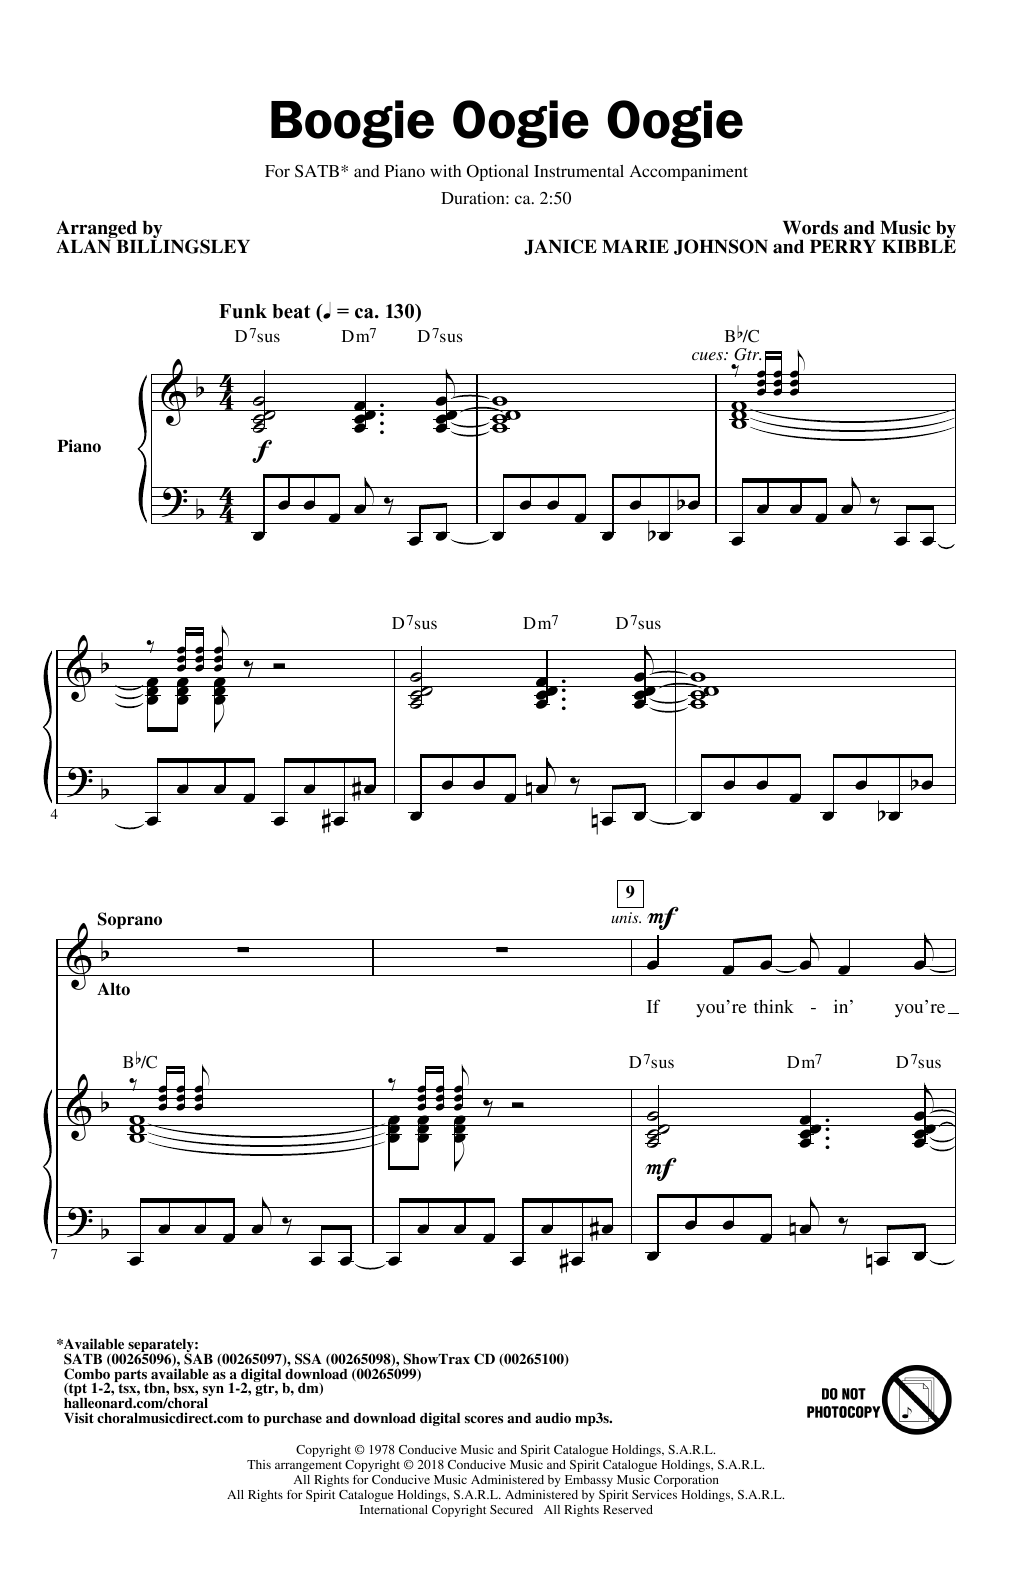 Download A Taste Of Honey Boogie Oogie Oogie (arr. Alan Billingsley) Sheet Music and learn how to play SAB Choir PDF digital score in minutes